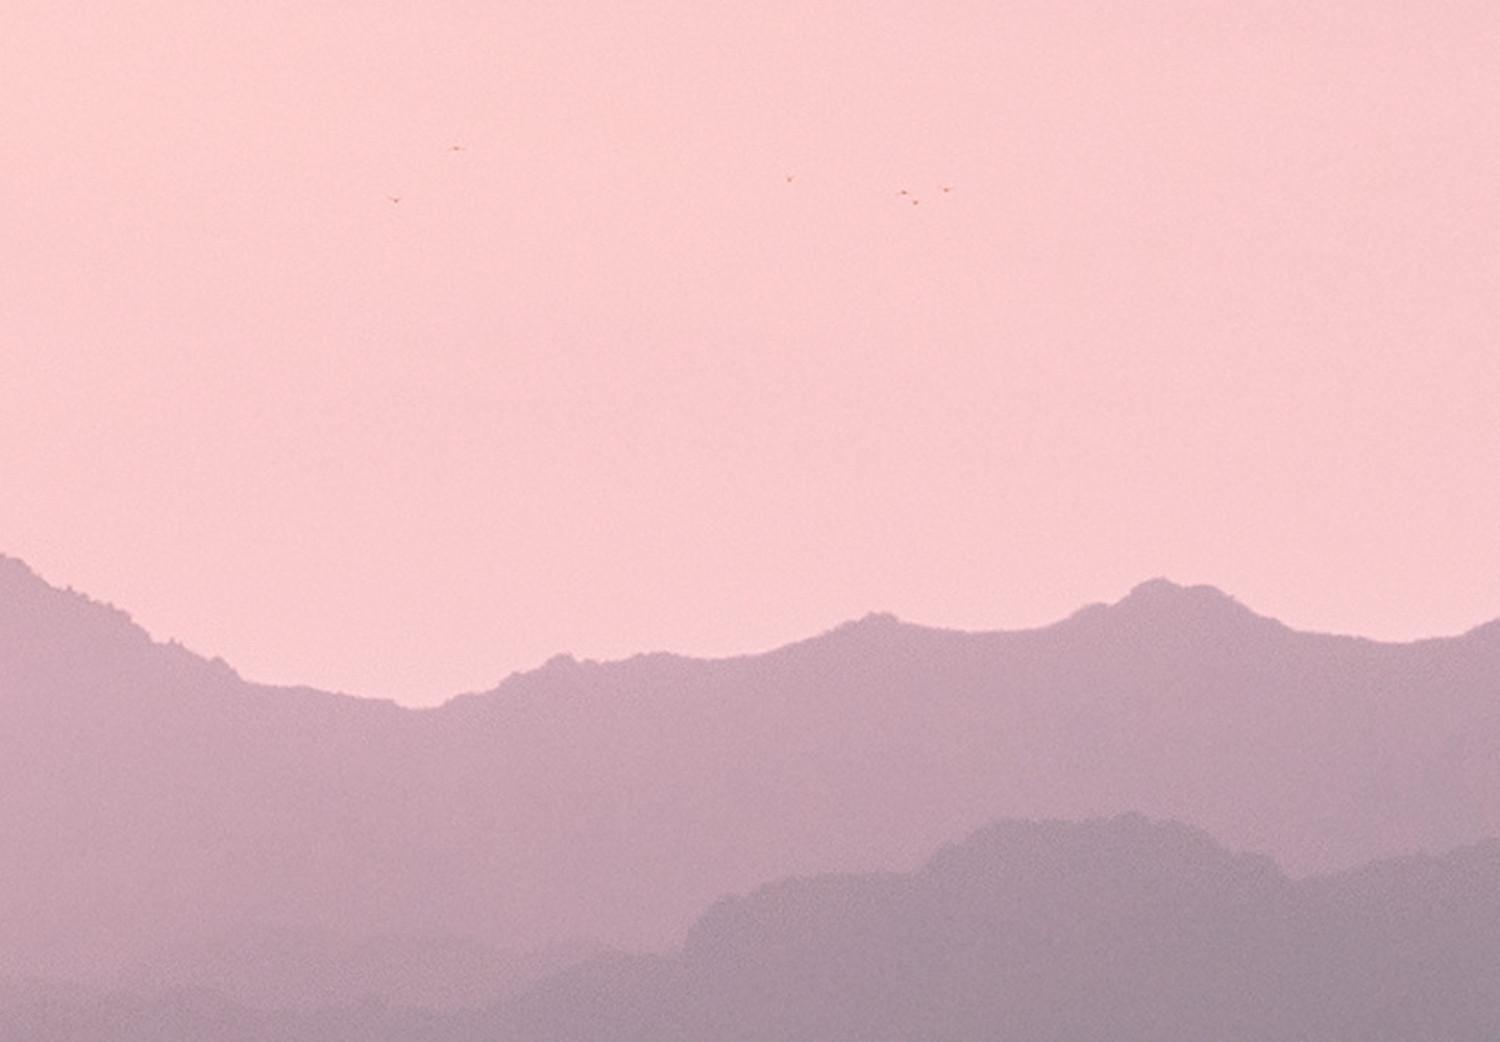 Cartel Montañas amanecer - paisaje montañosa cielo rosado